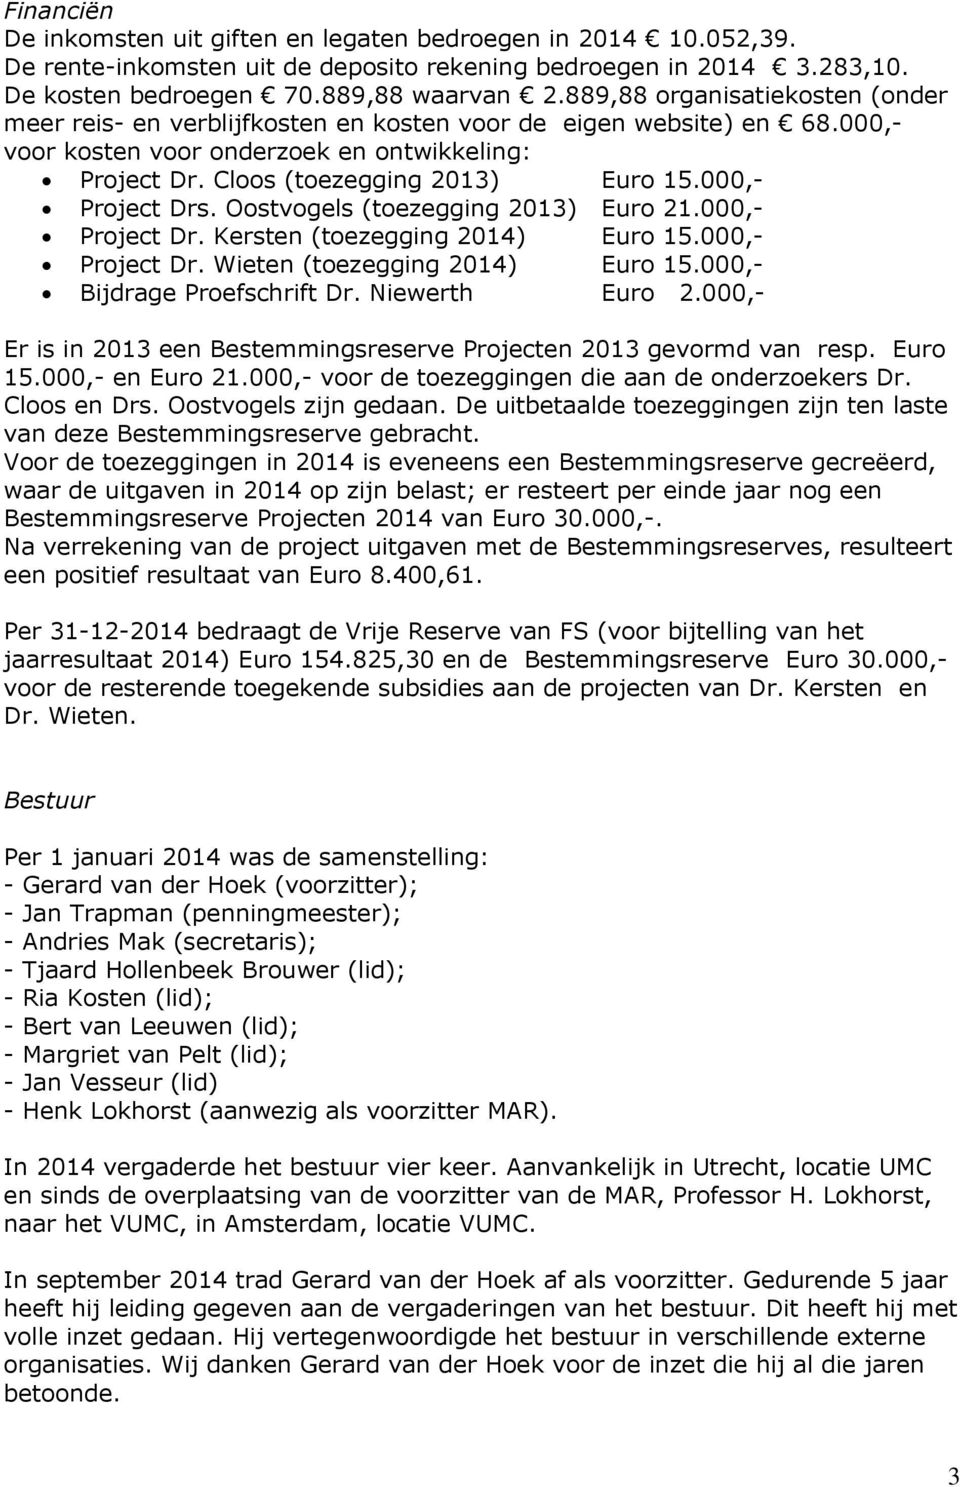 000,- Project Drs. Oostvogels (toezegging 2013) Euro 21.000,- Project Dr. Kersten (toezegging 2014) Euro 15.000,- Project Dr. Wieten (toezegging 2014) Euro 15.000,- Bijdrage Proefschrift Dr.